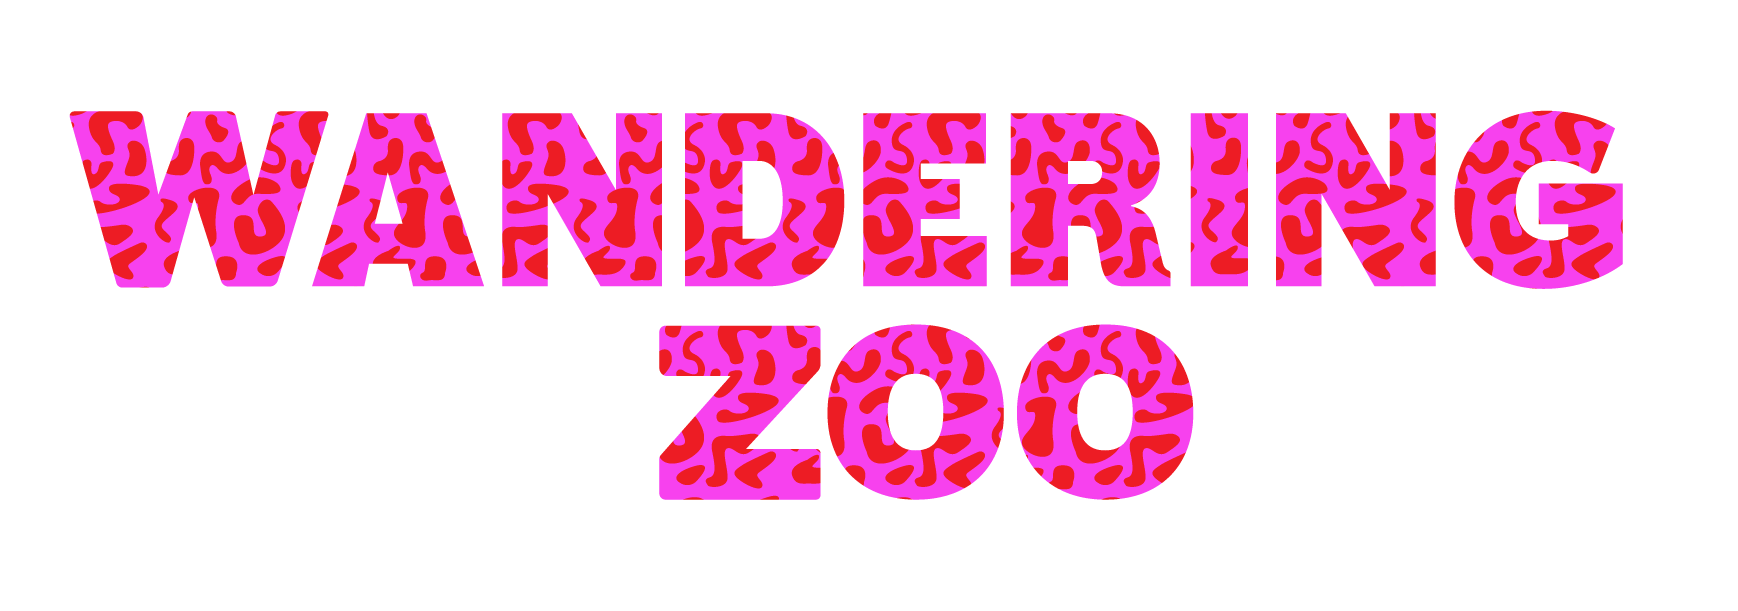 Wandering Zoo